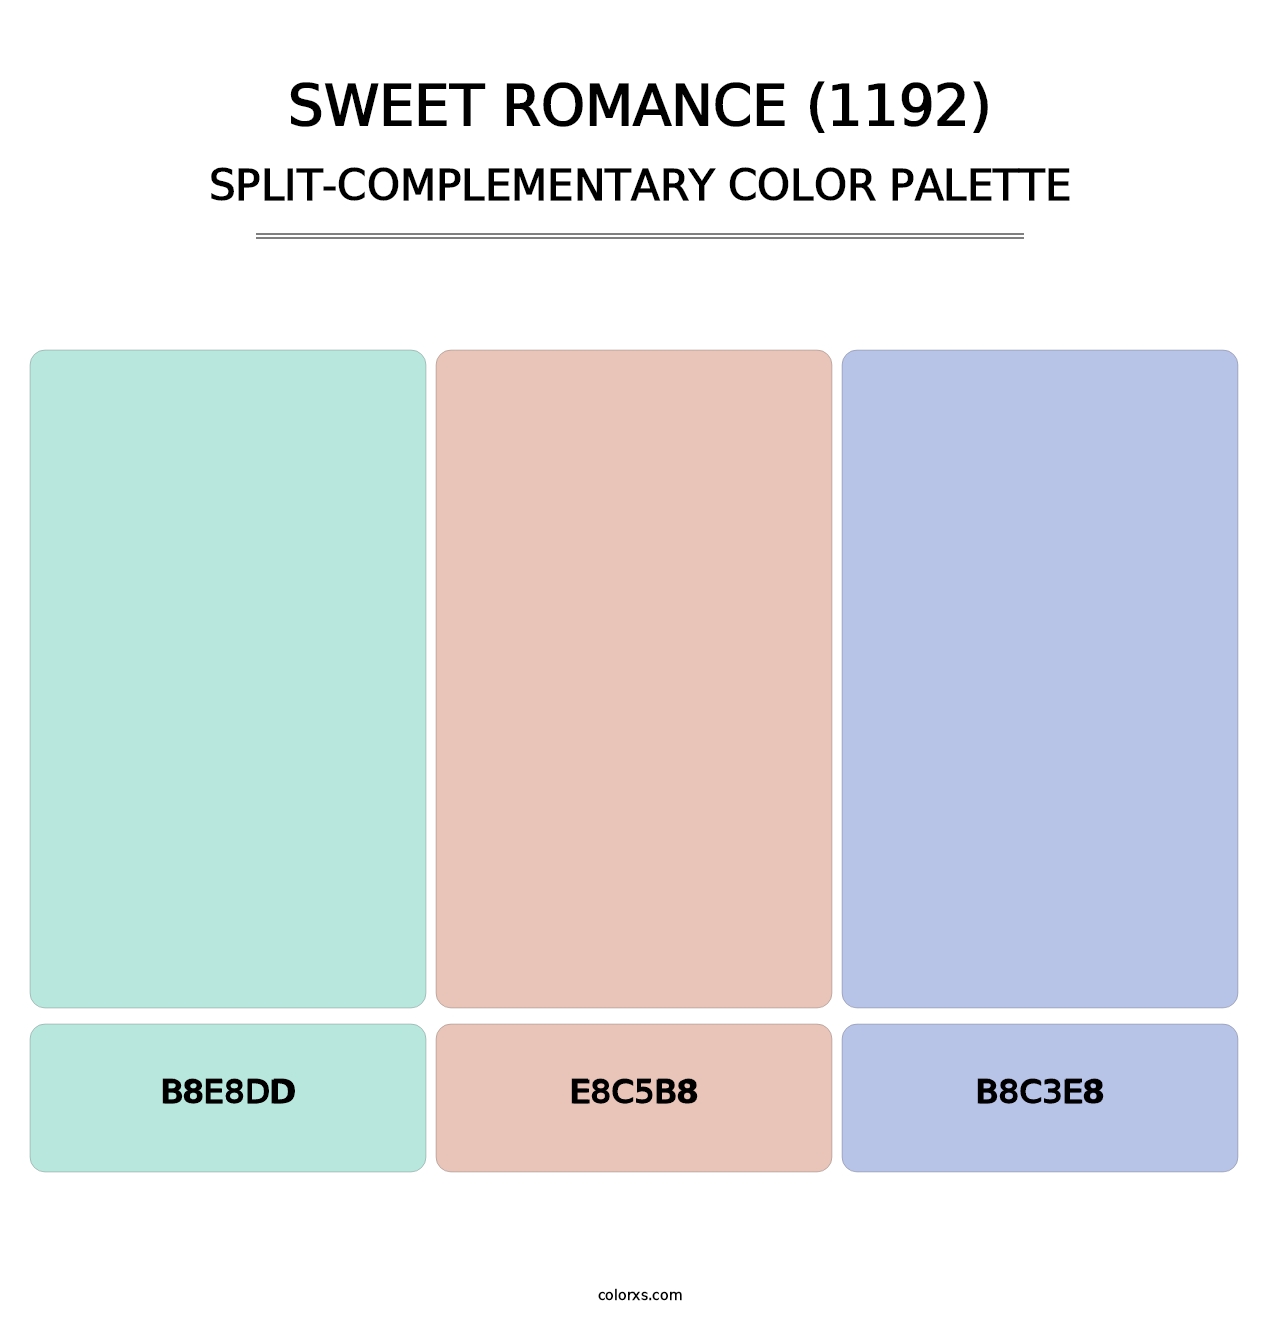 Sweet Romance (1192) - Split-Complementary Color Palette